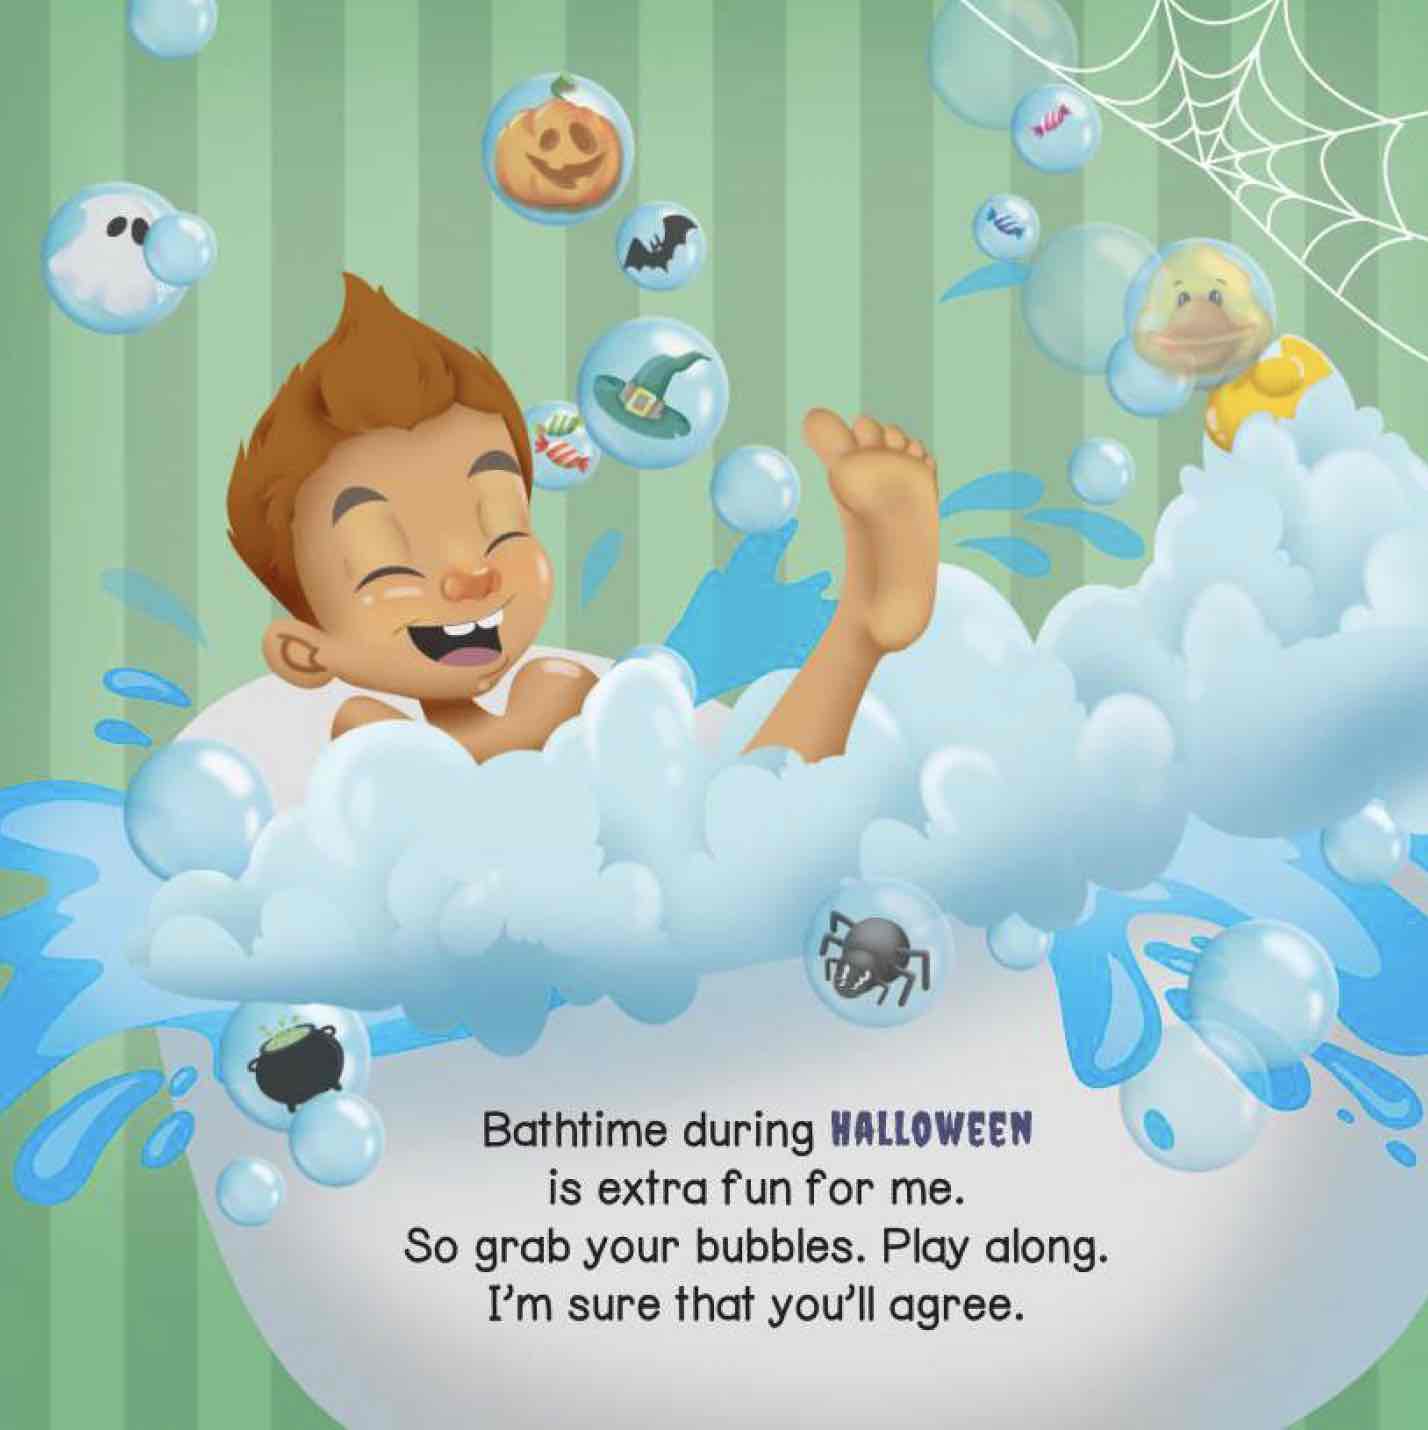 Bubble Head Boo: Happy Clean Halloween! - Make Momentos